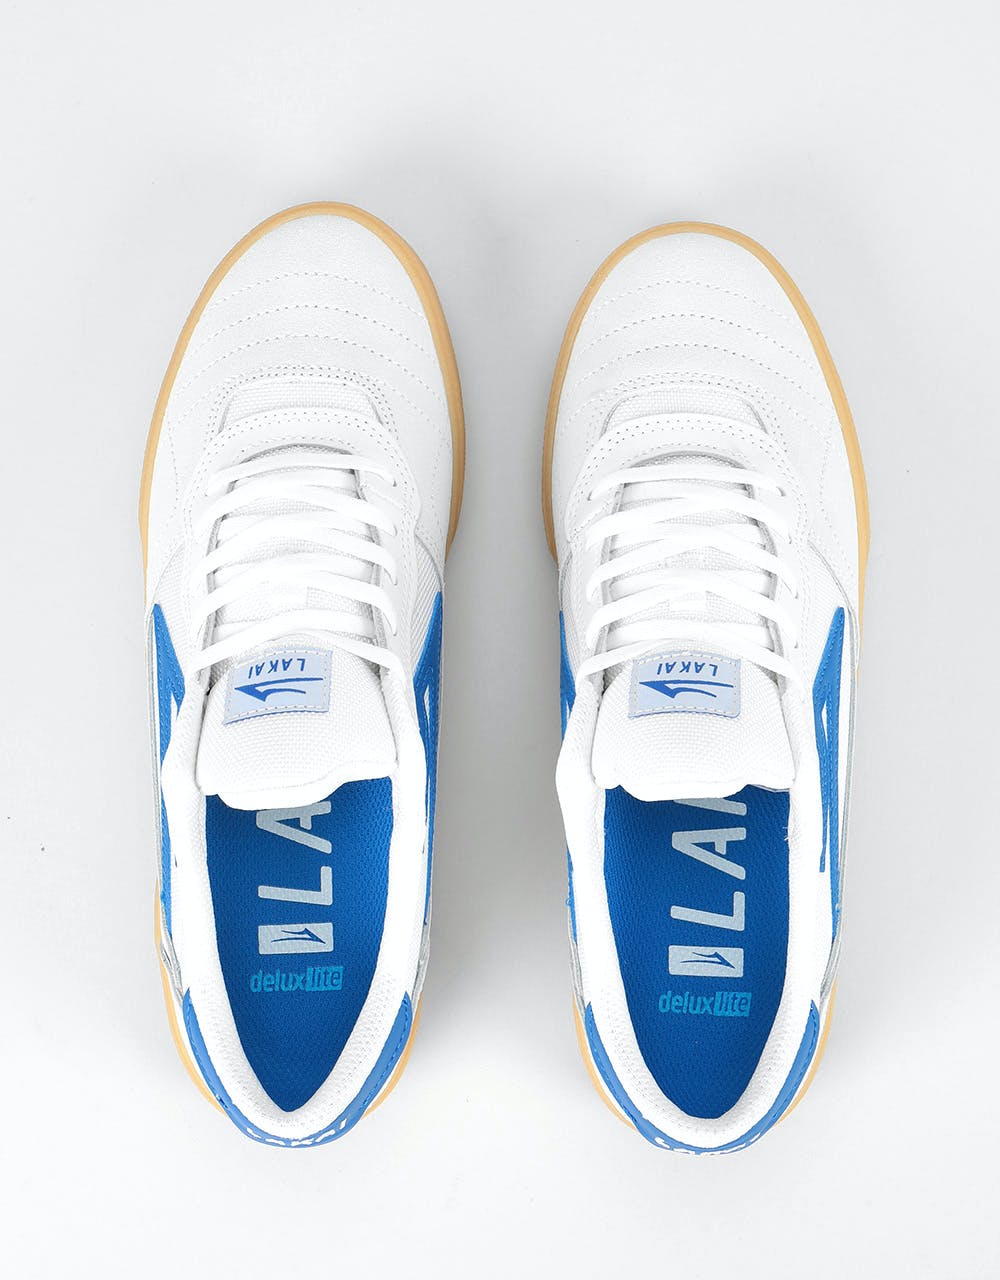 Lakai Cambridge Skate Shoes - White/Blue Suede